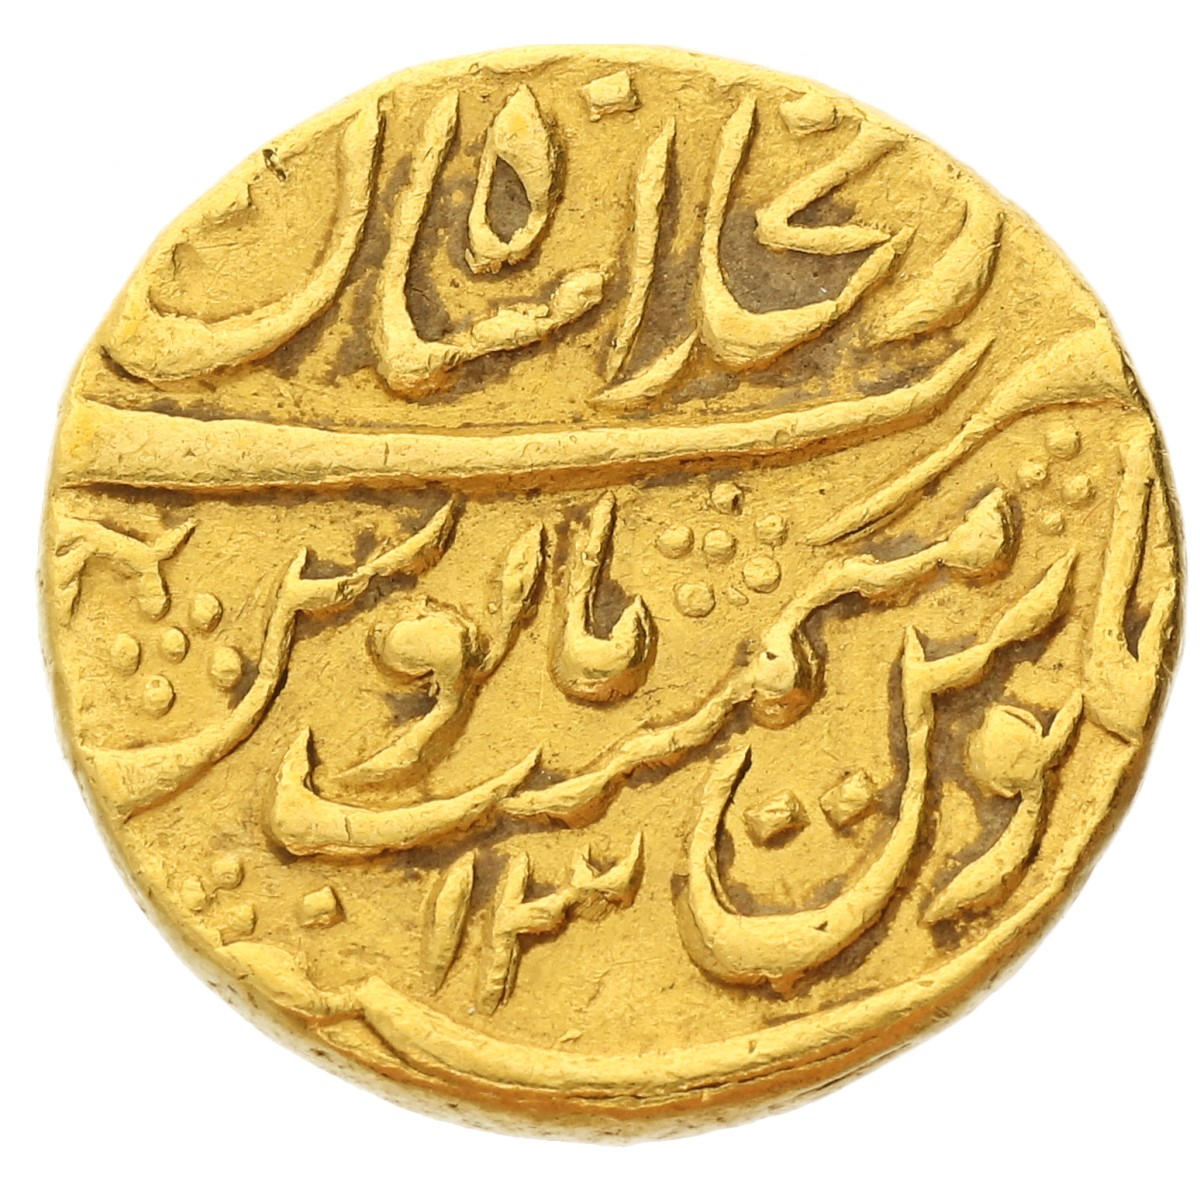 India - Mughal Empire - 1 mohur - Year 13(1731-1732) - Muhammad Shah